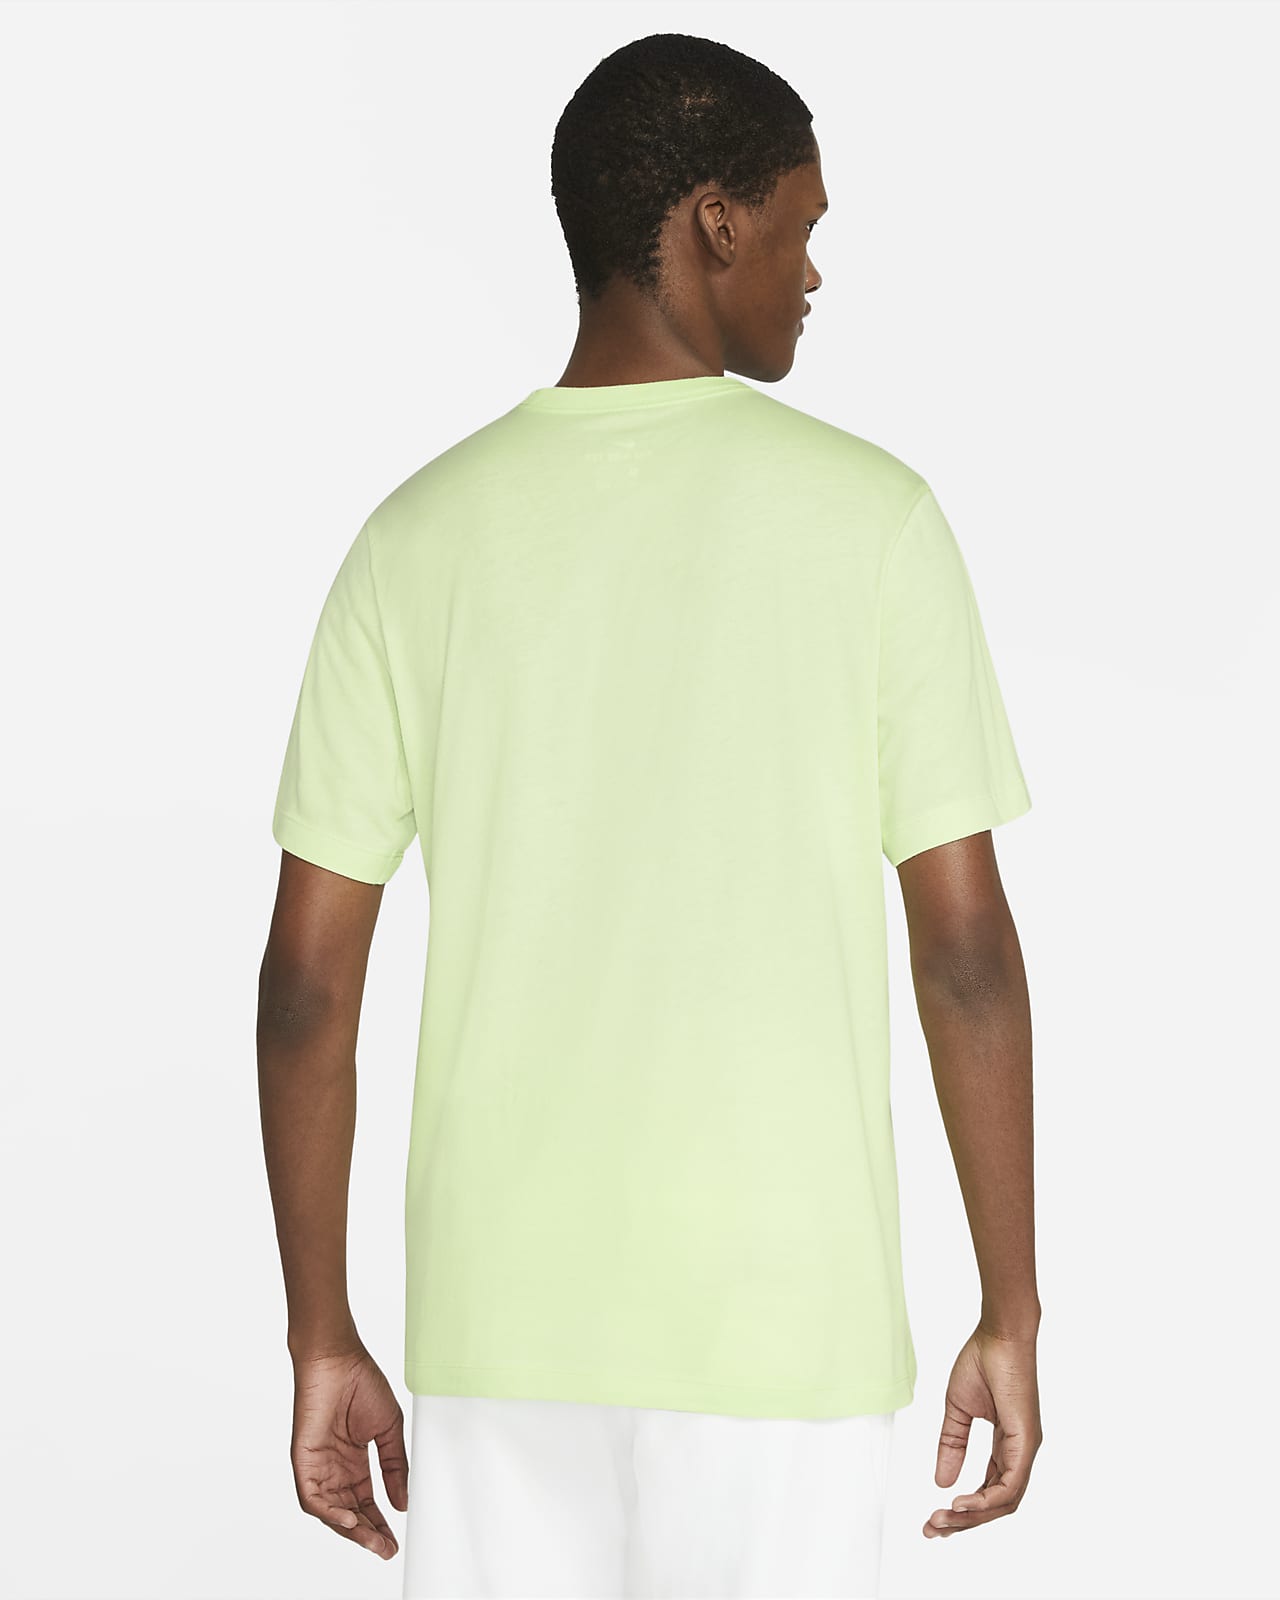 mint green nike shirt